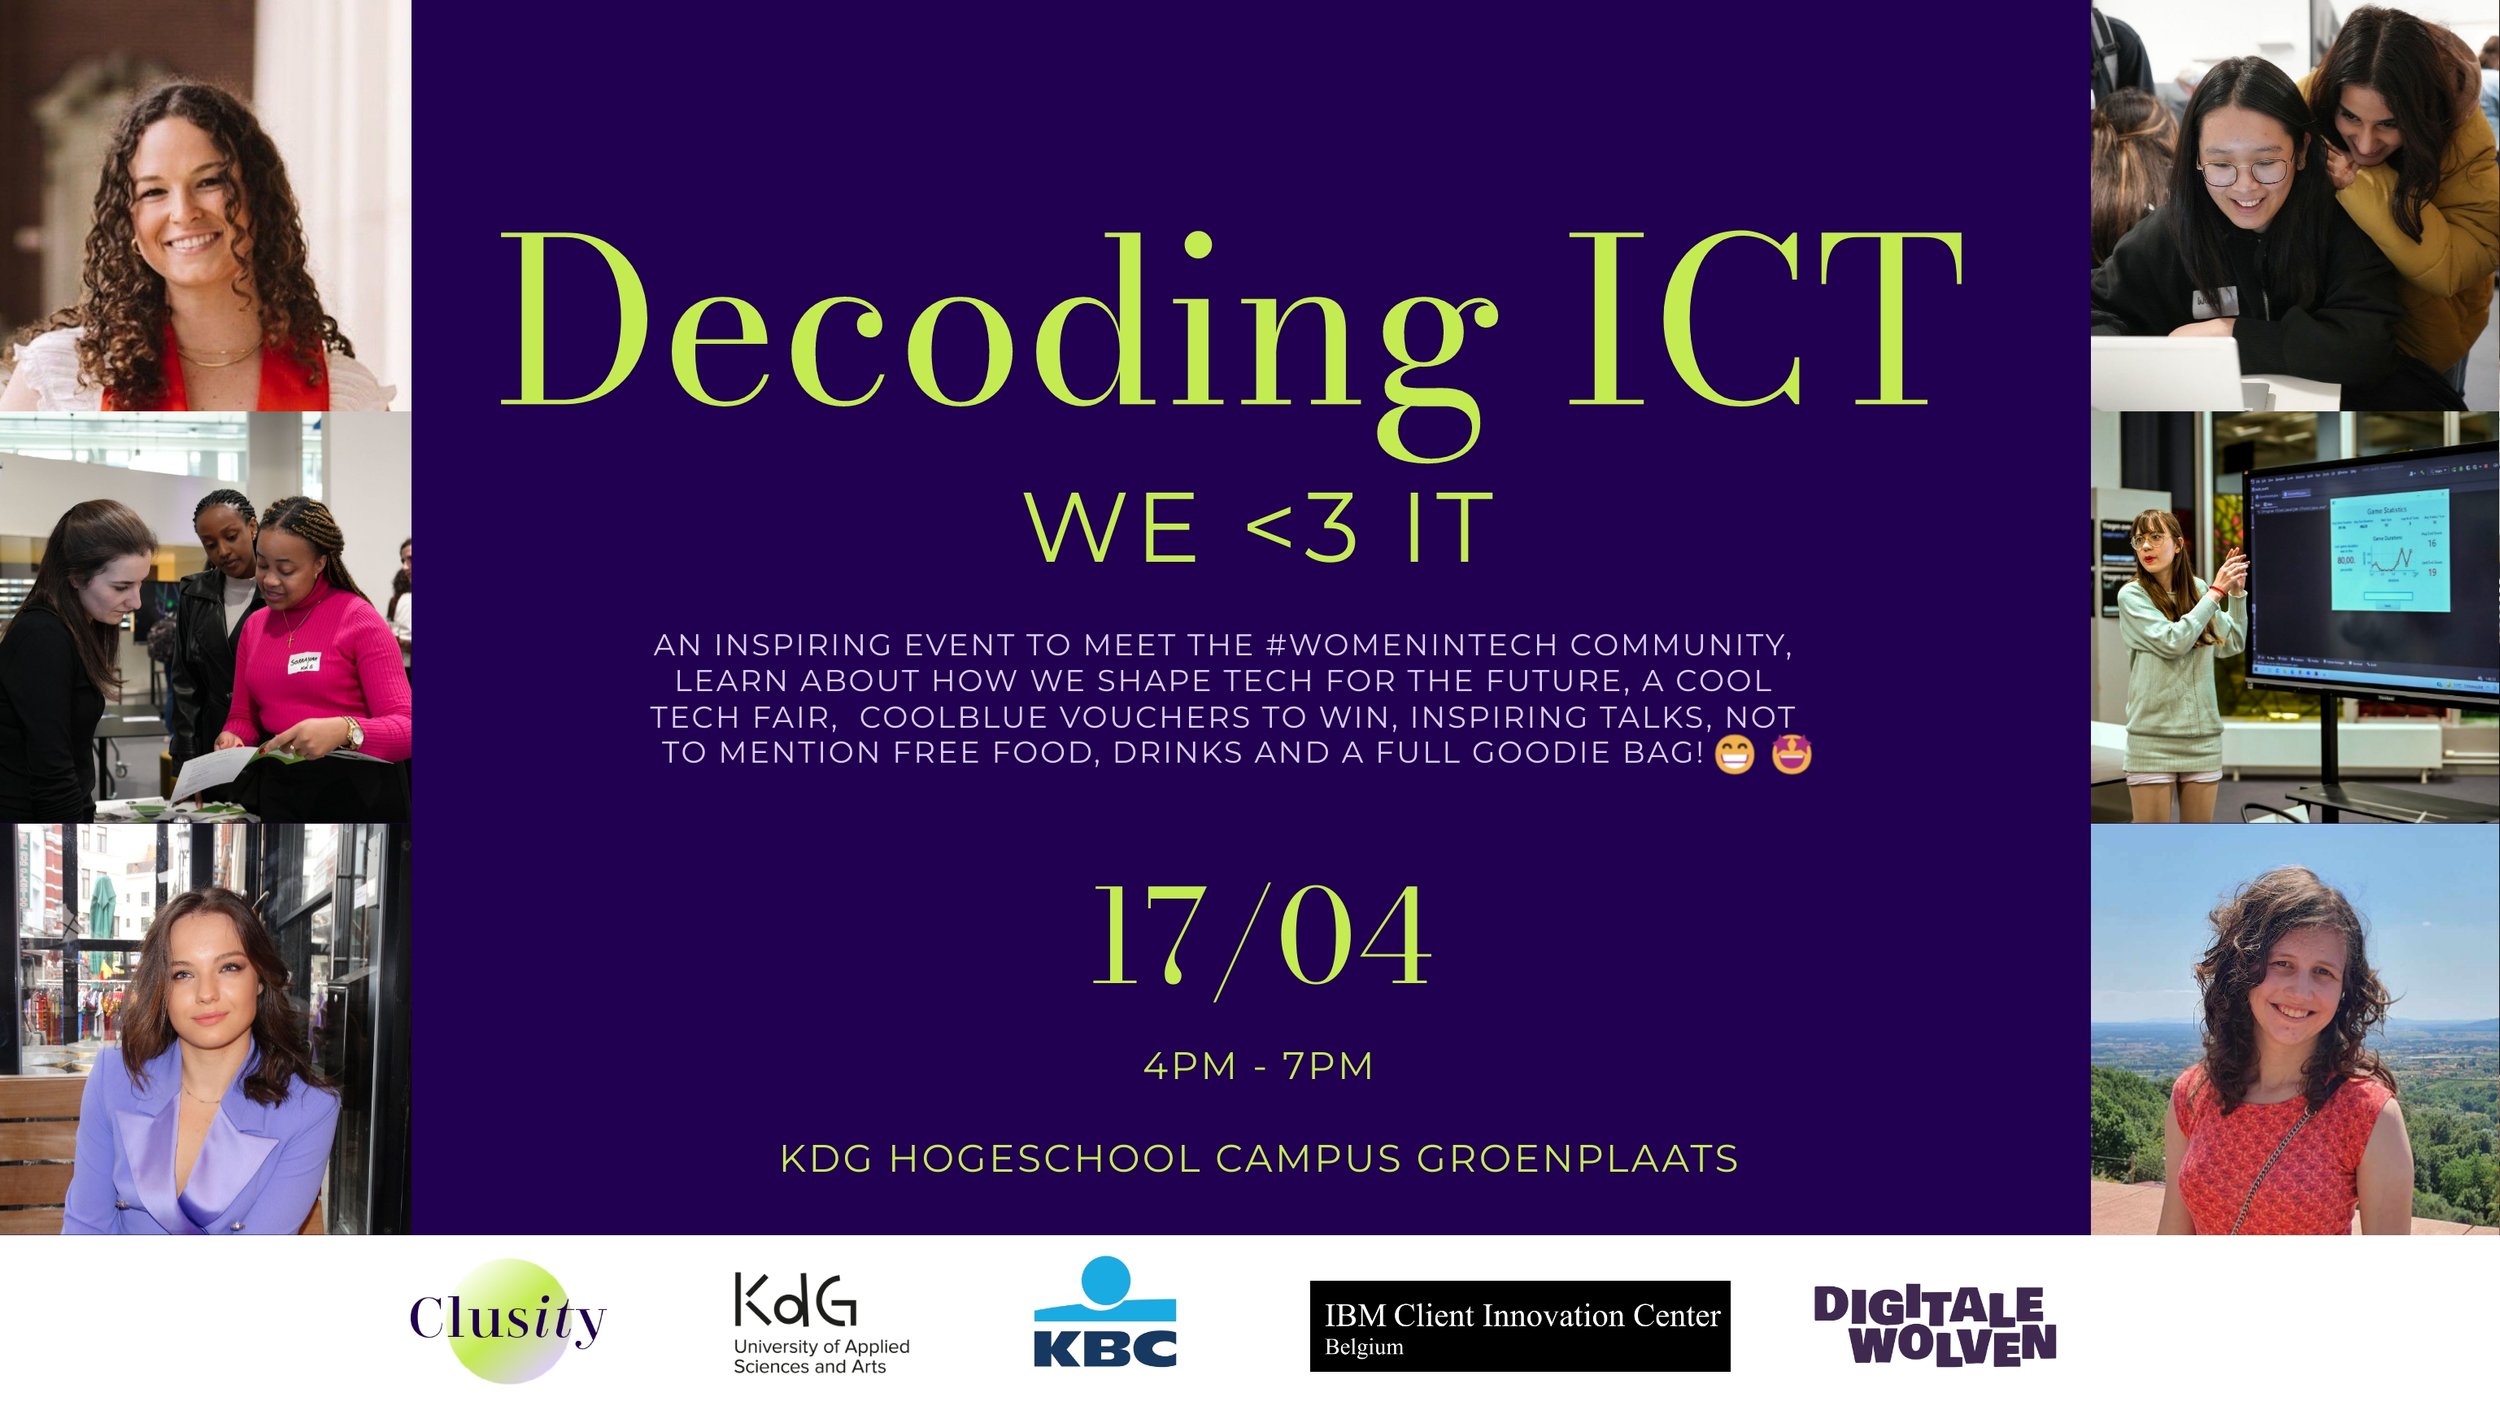 Decoding Tech 3rd edition: WE &lt;3 IT